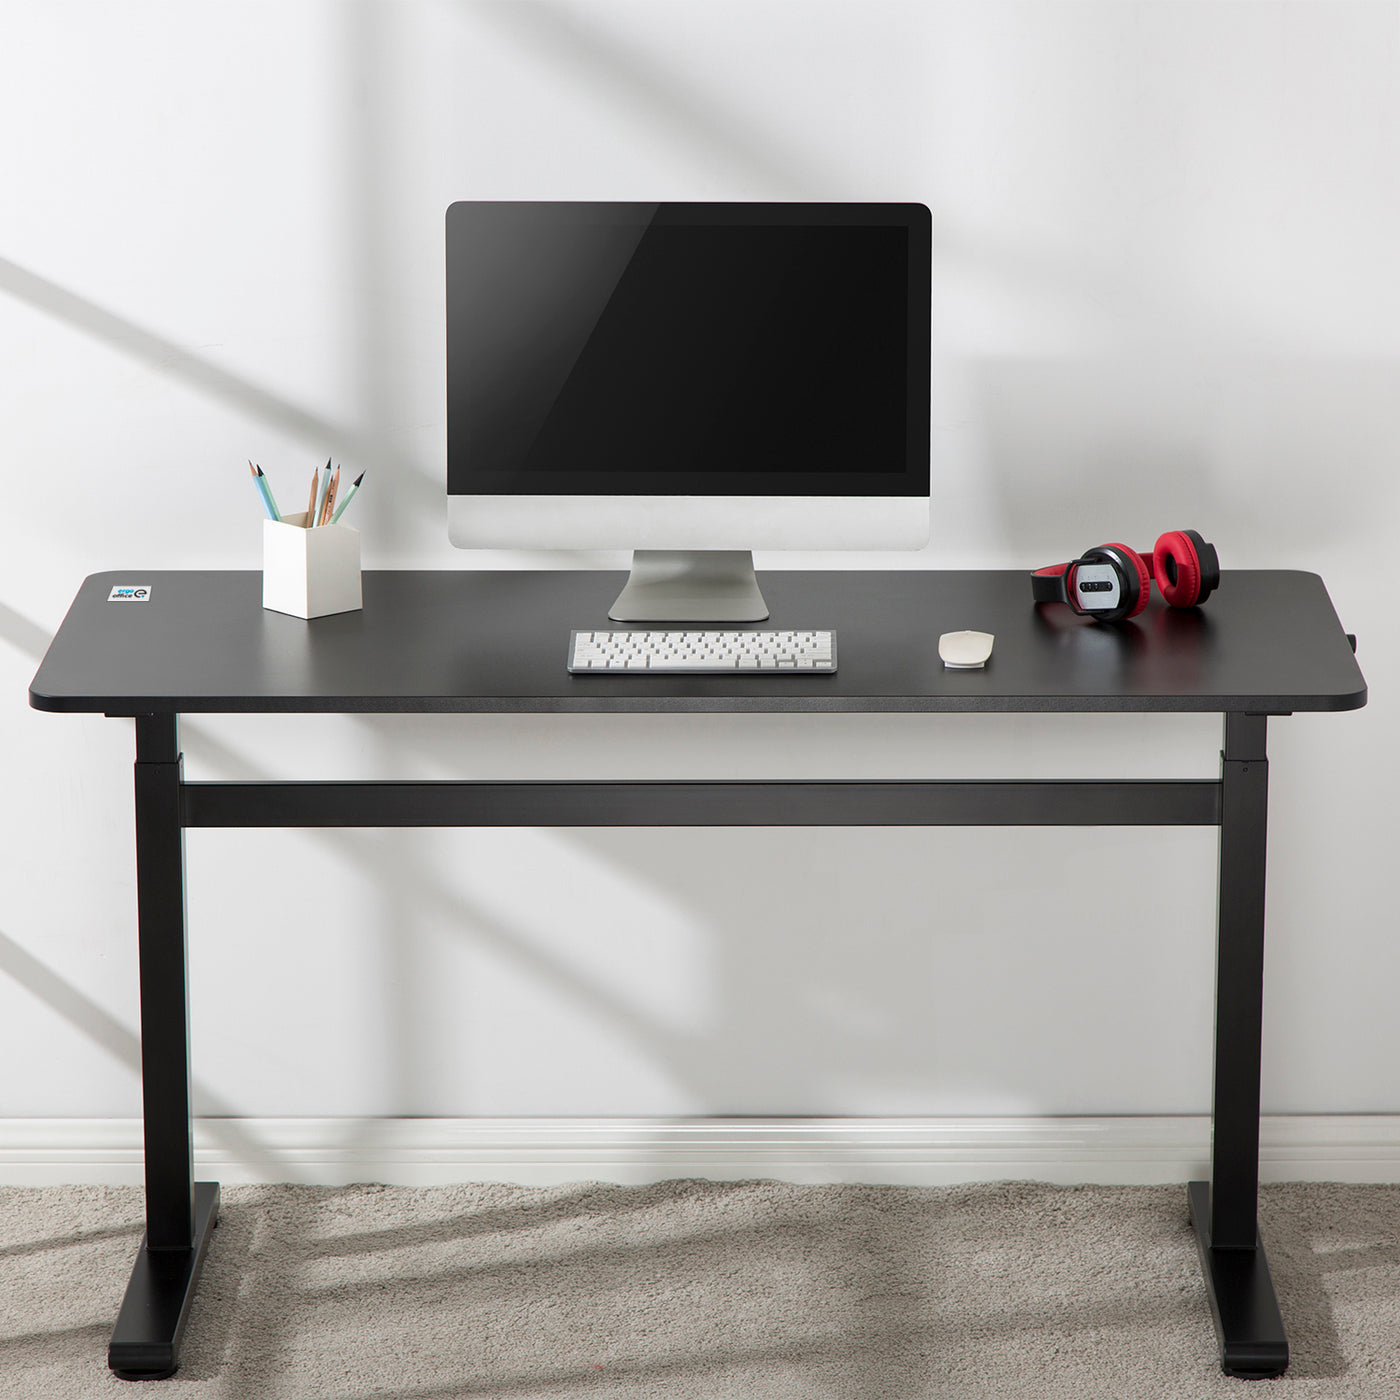 Ergo Office ER-401 Sit-stand desk 140x60cm Manual Height Adjustable Office Desk max 117cm Ergonomic Table Loadable up to 40kg Black